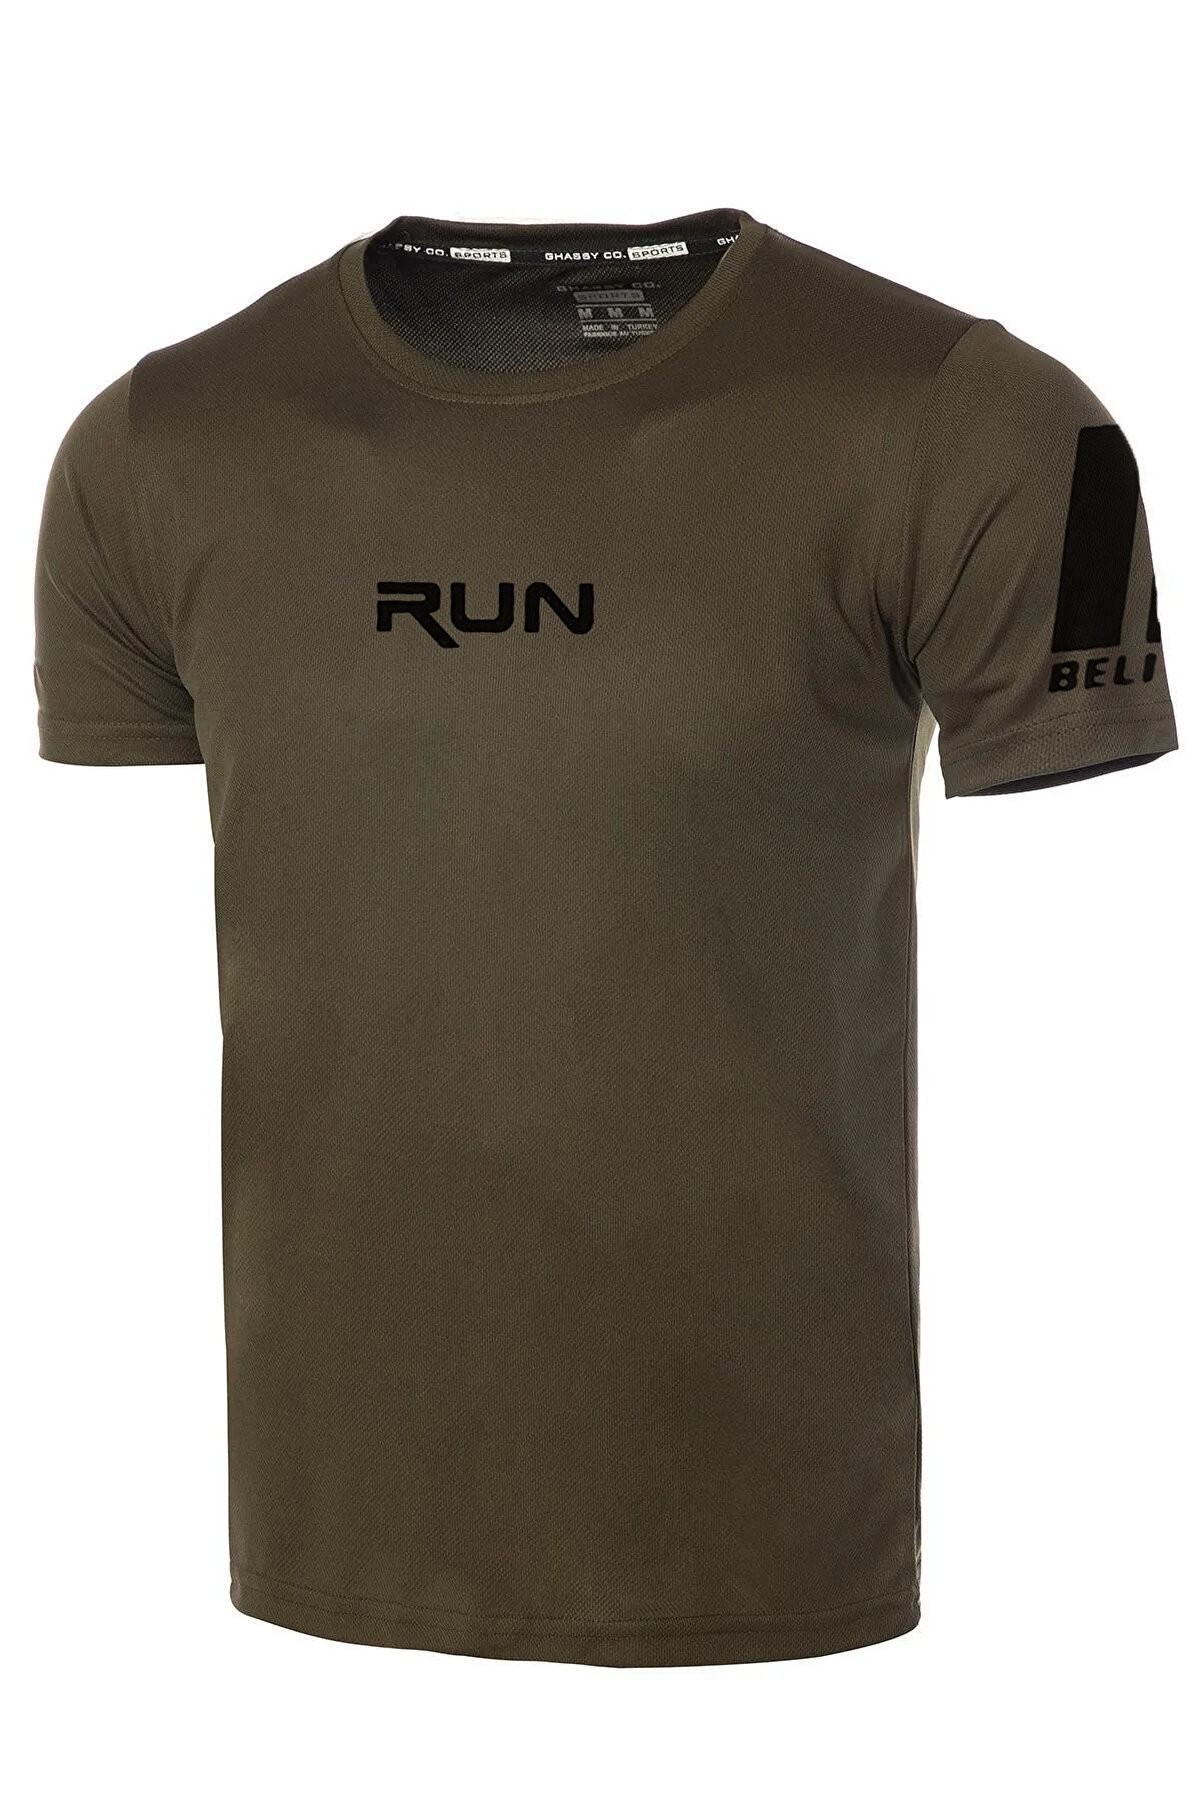 Ghassy Co Ghassy Co. Erkek Nem Emici Hızlı Kuruma Performans Running Spor T-shirt - Haki